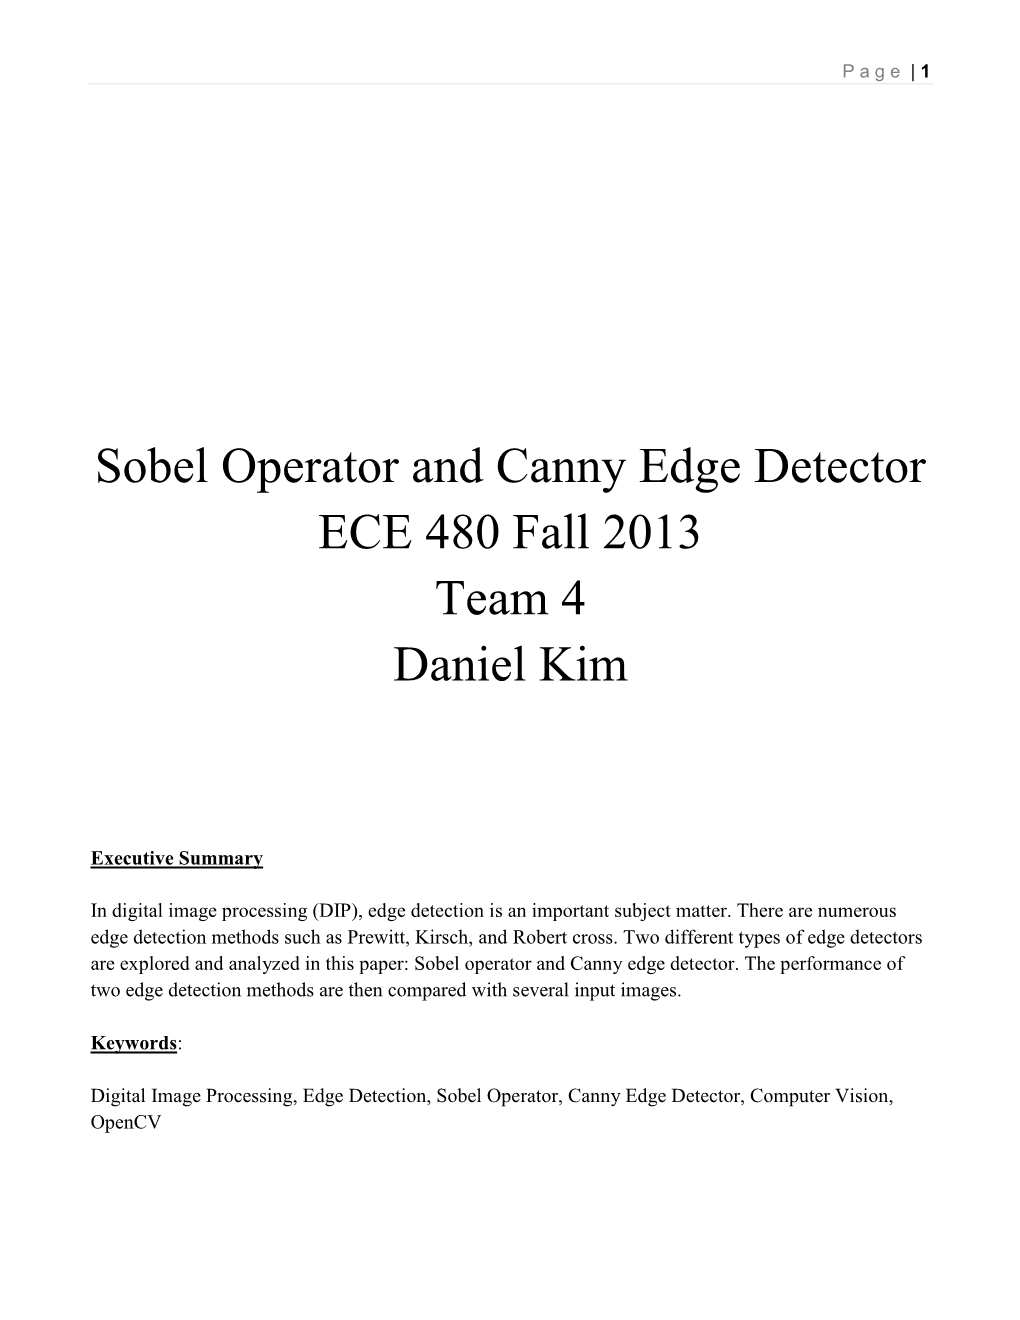 Sobel Operator and Canny Edge Detector ECE 480 Fall 2013 Team 4 Daniel Kim